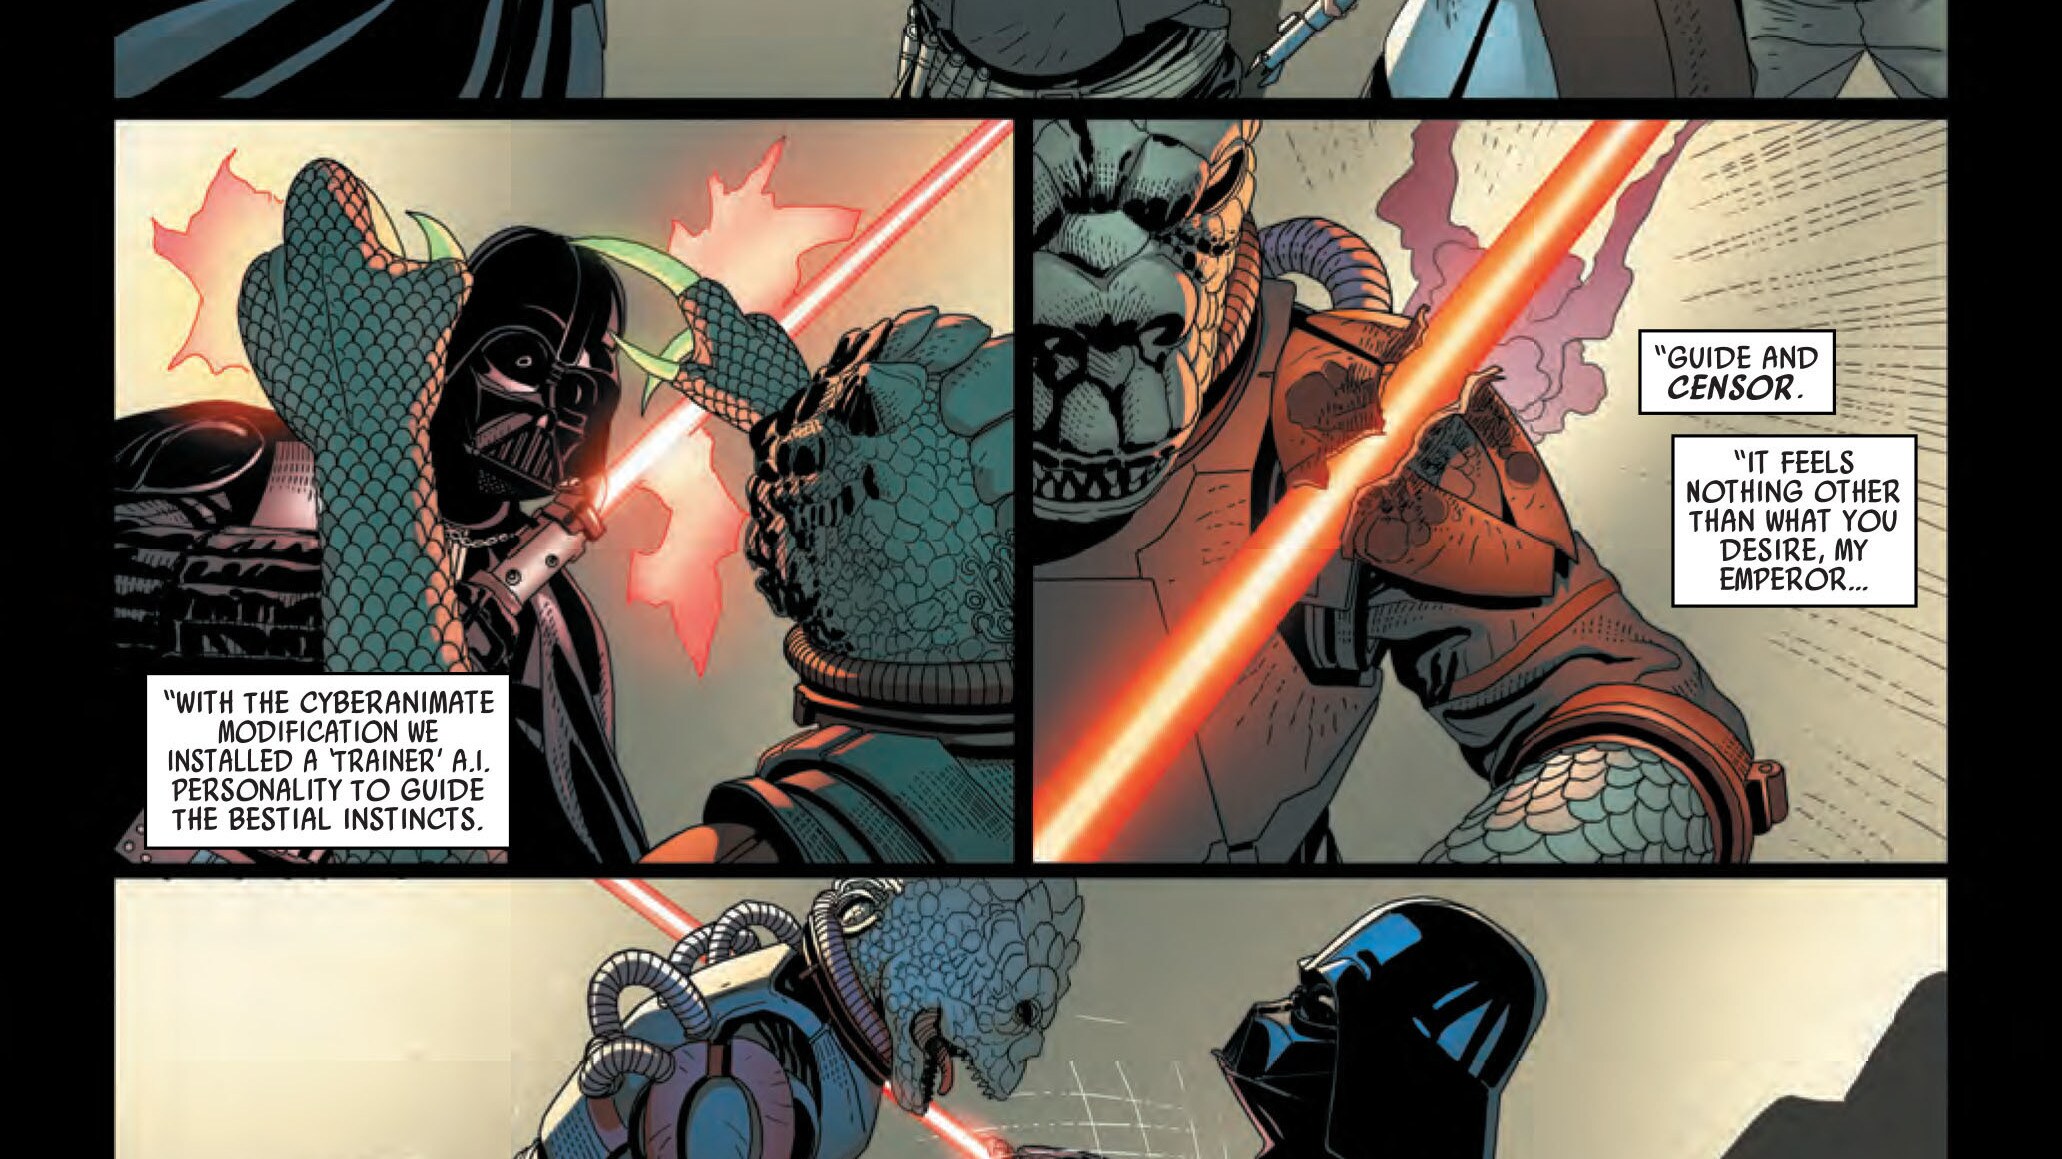 Darth Vader #6 - Vader takes on cyborgs